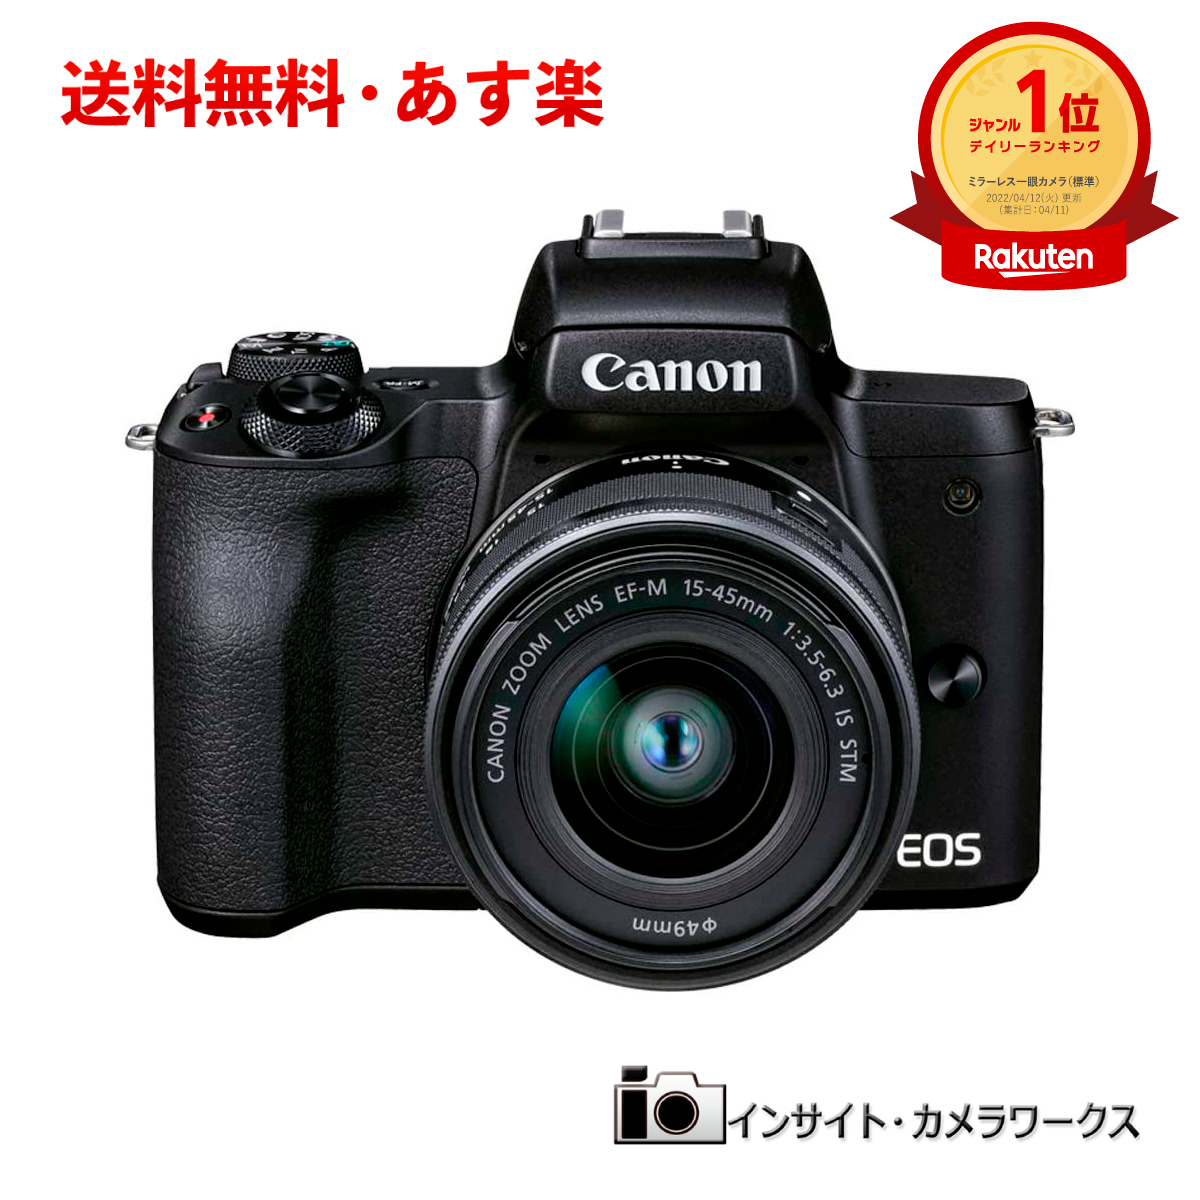  Canon ミラーレス一眼カメラ EOS Kiss M2 標準ズームレンズキット ブラック KISSM2BK-1545-A